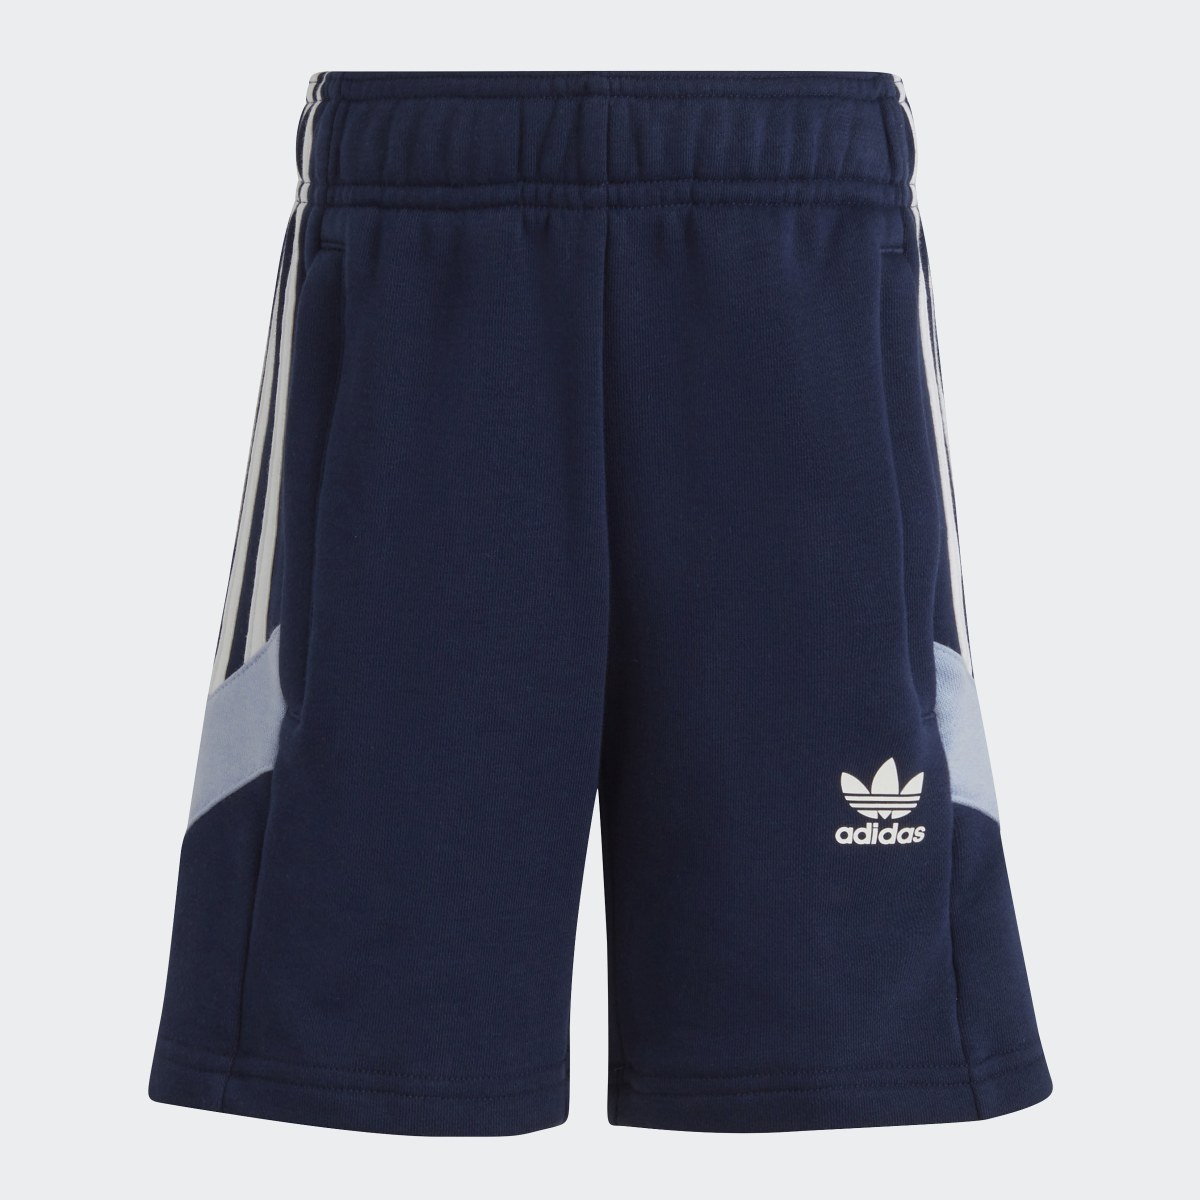 Adidas Rekive Shorts and Tee Set. 7